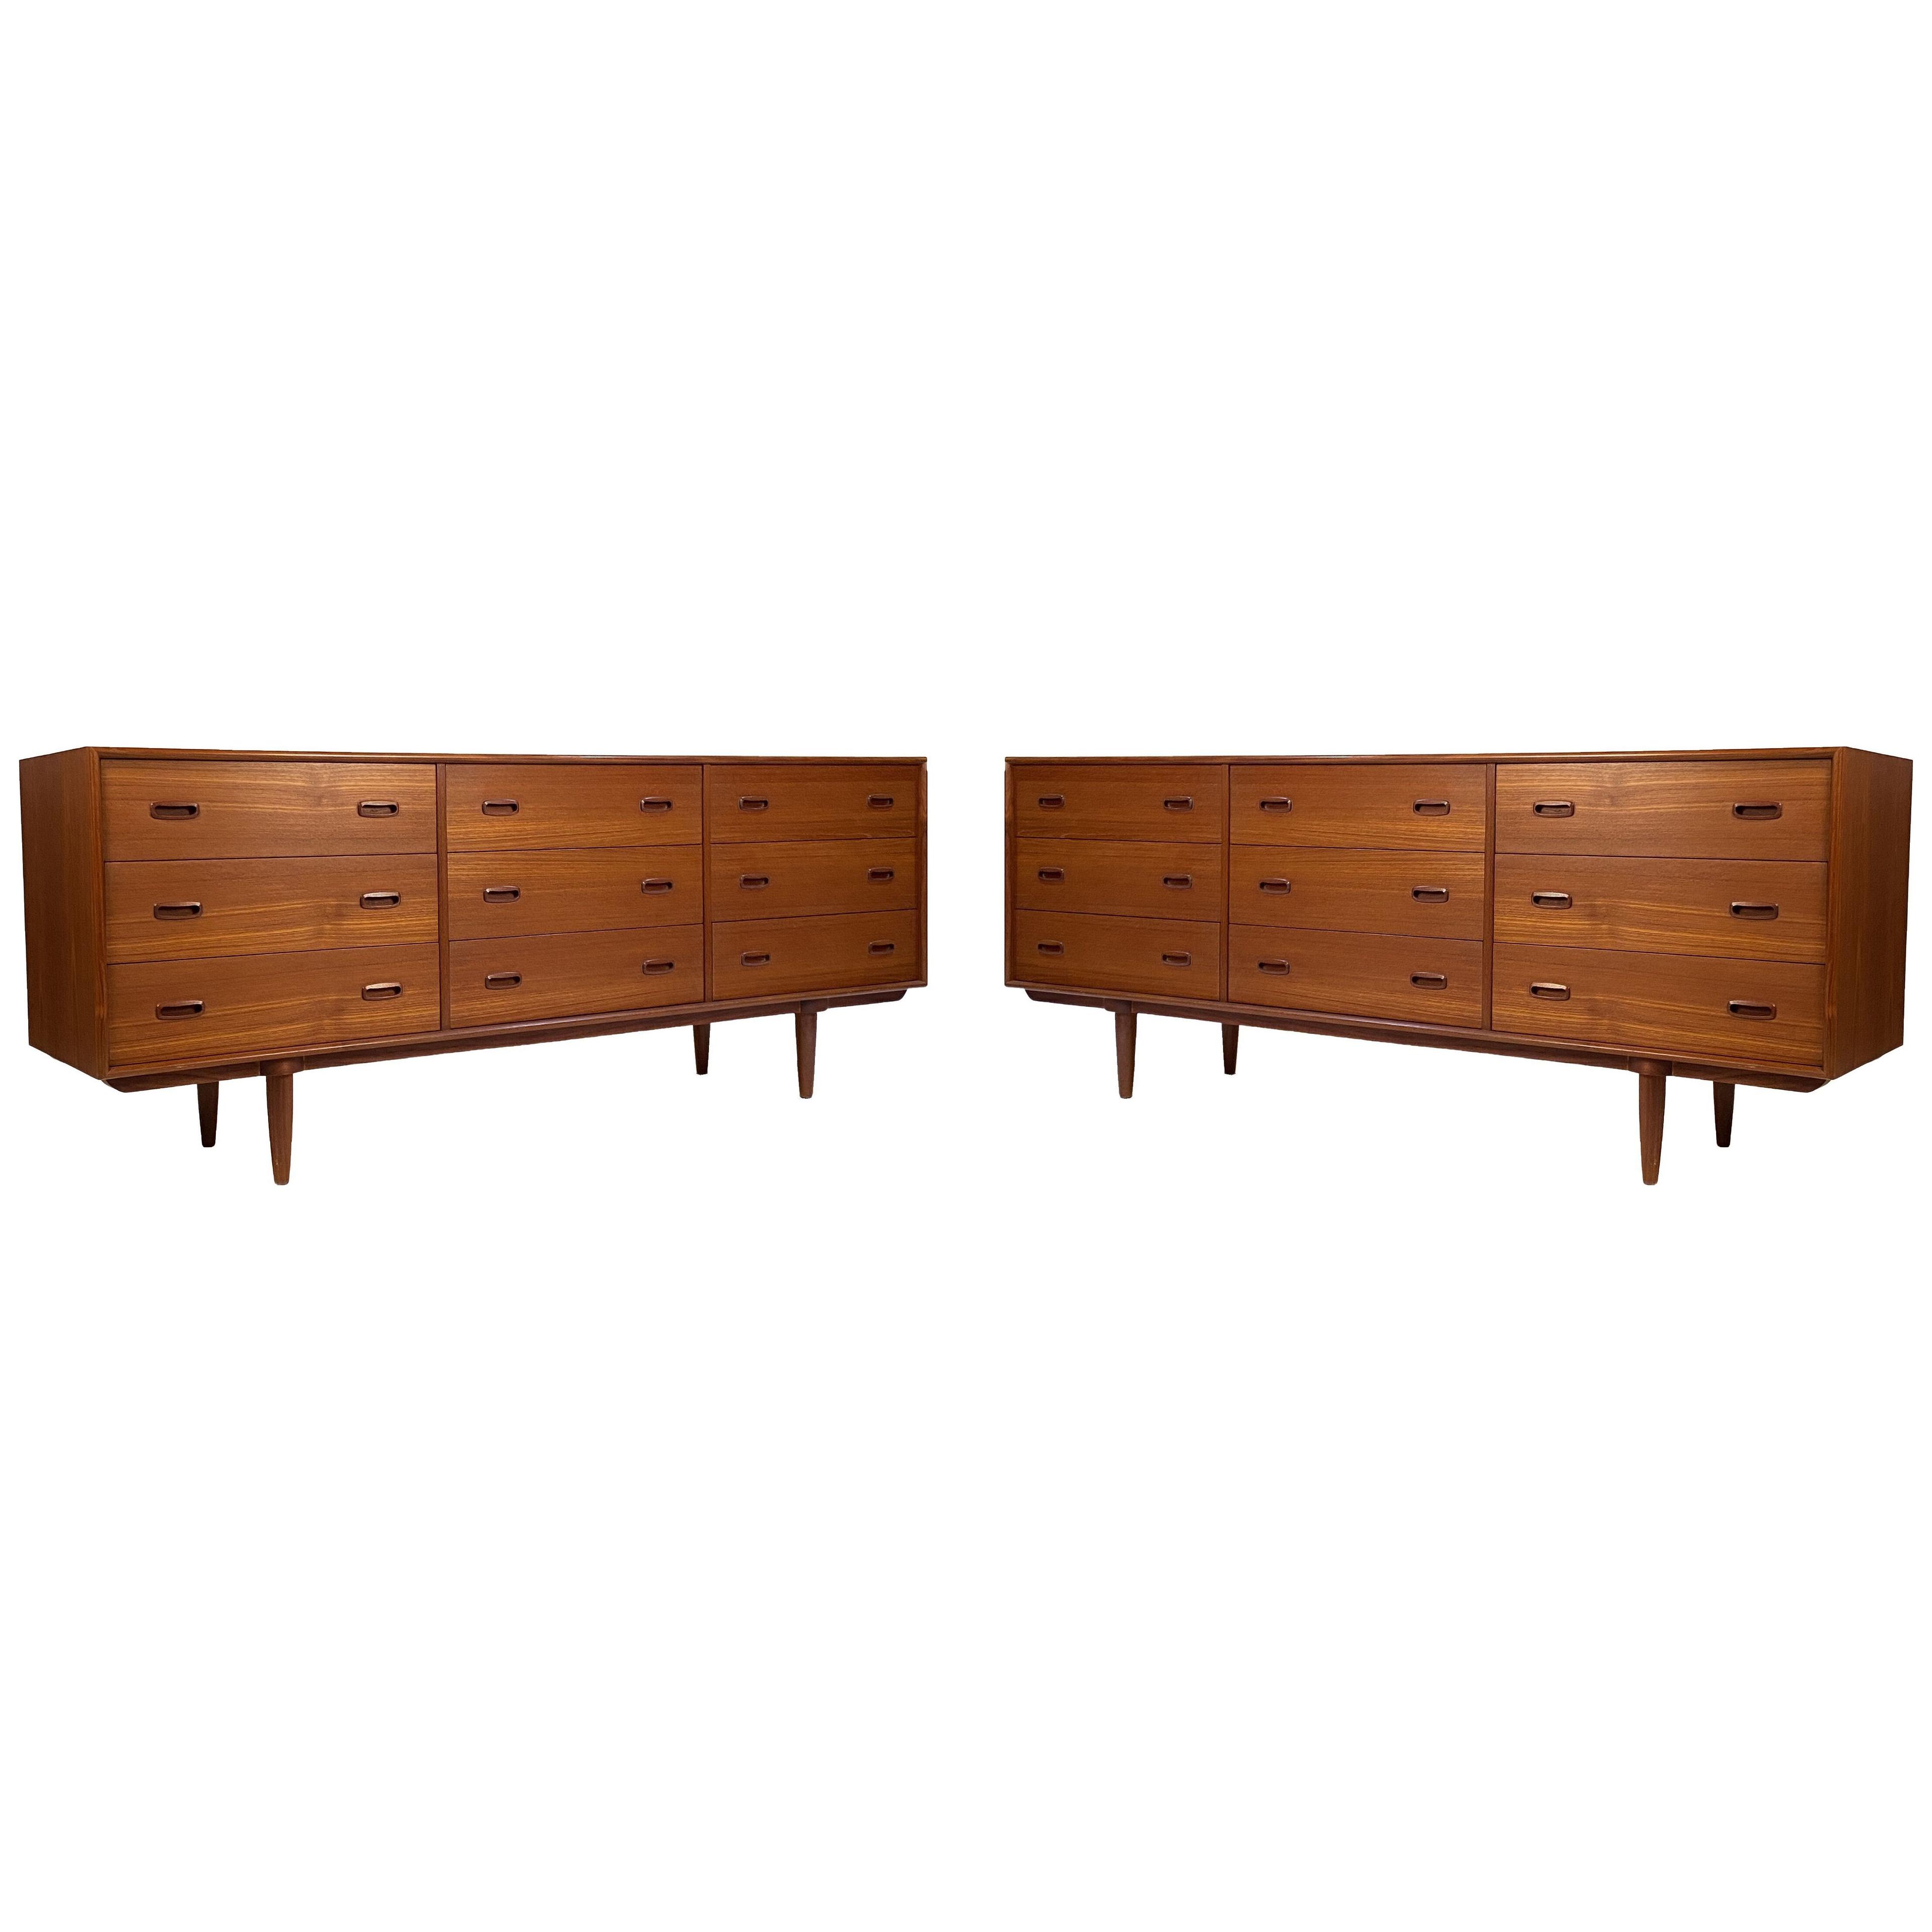 Danish Modern 9 Drawer Dressers in Teak with Oak Interiors 1960s - Pair